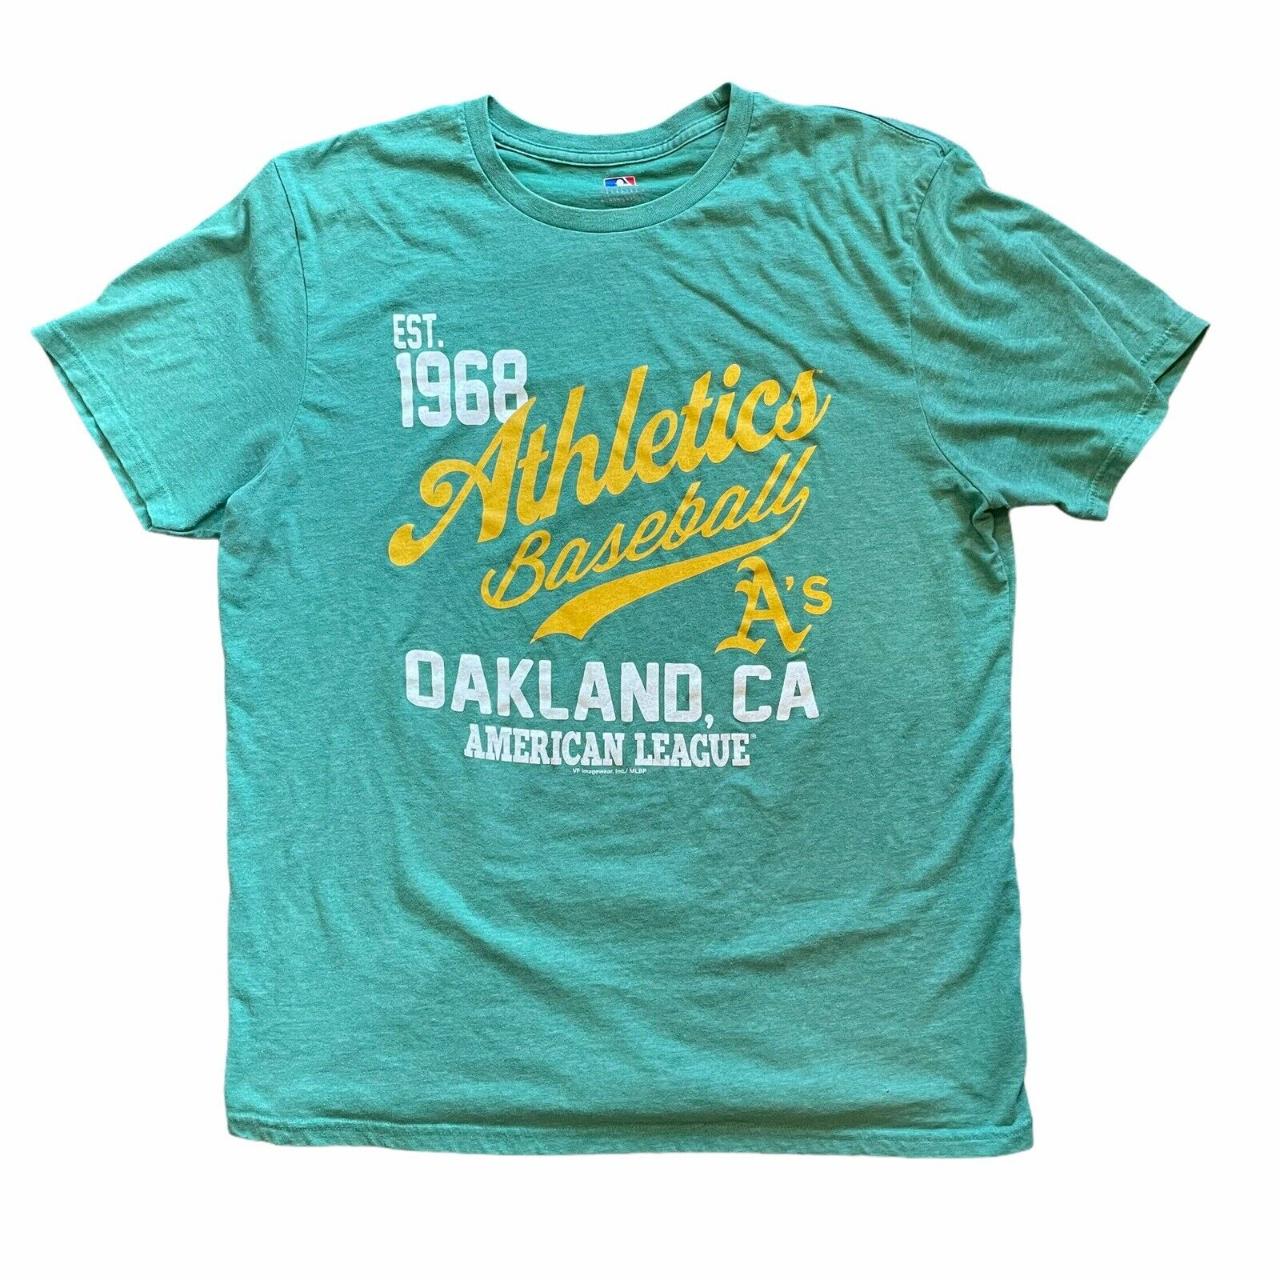 Oakland Athletics baseball est. 1968 American league logo shirt